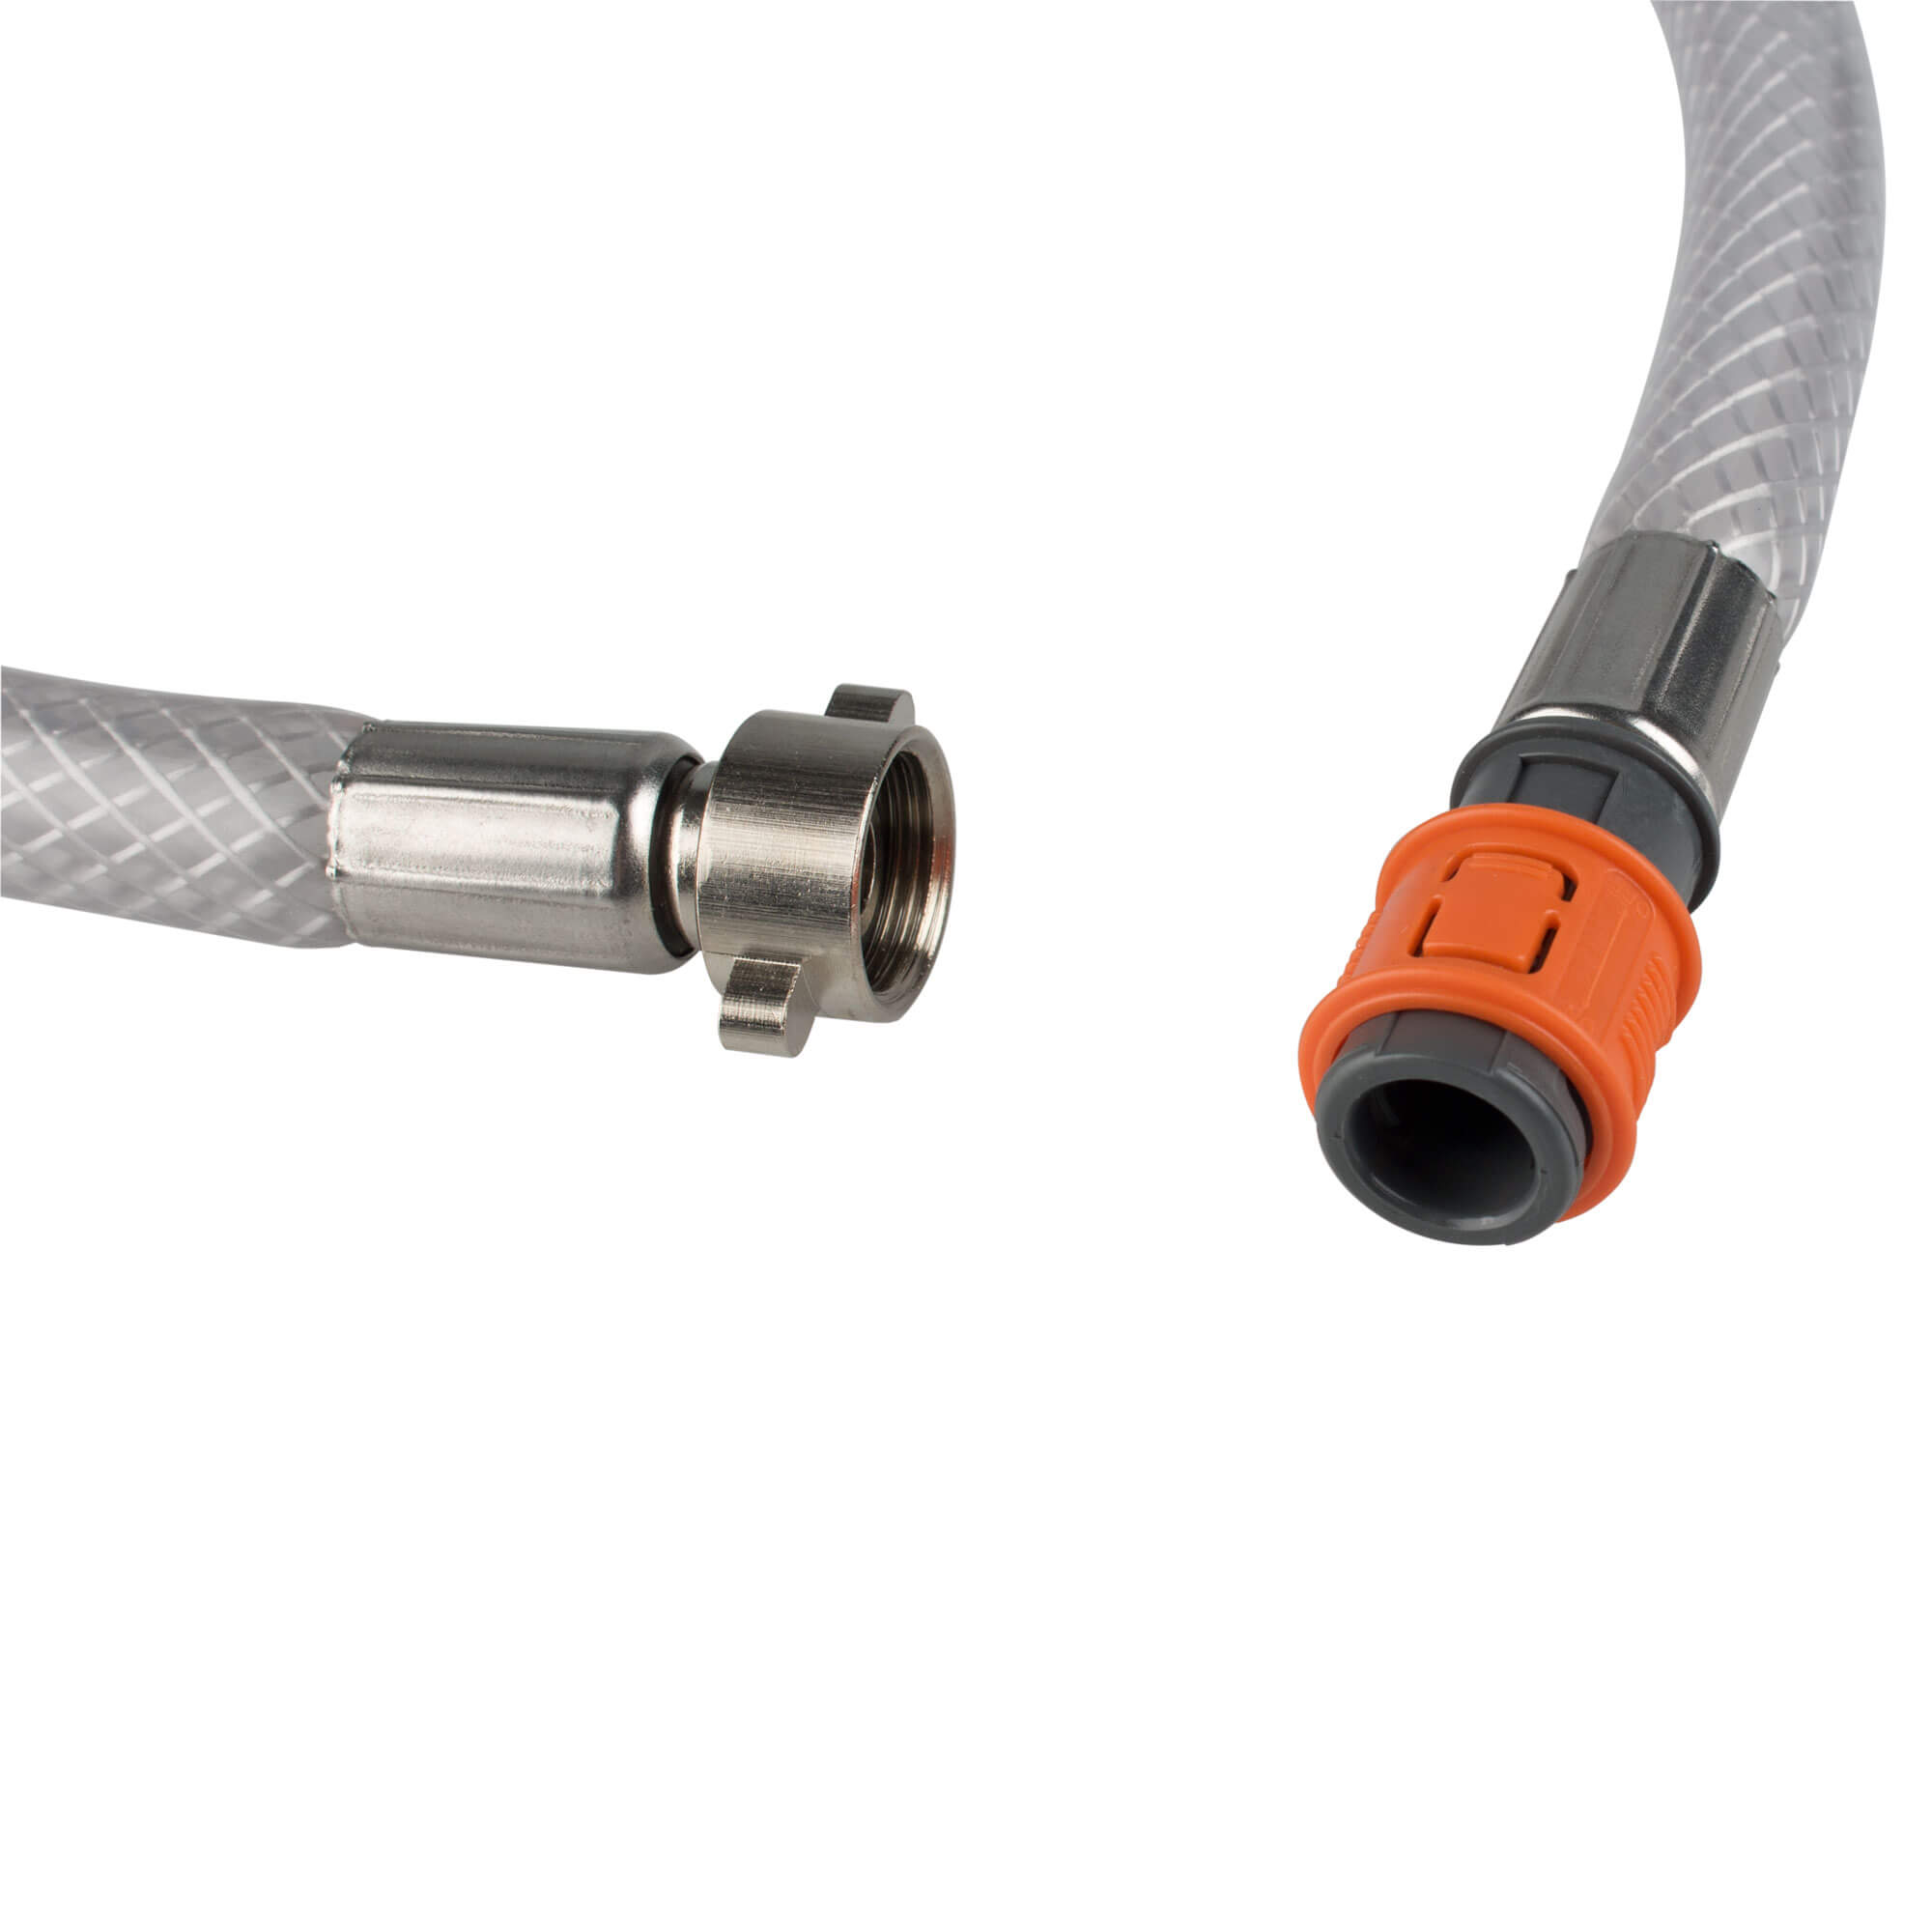 Spülboy connection hose easy clix - 3/8"